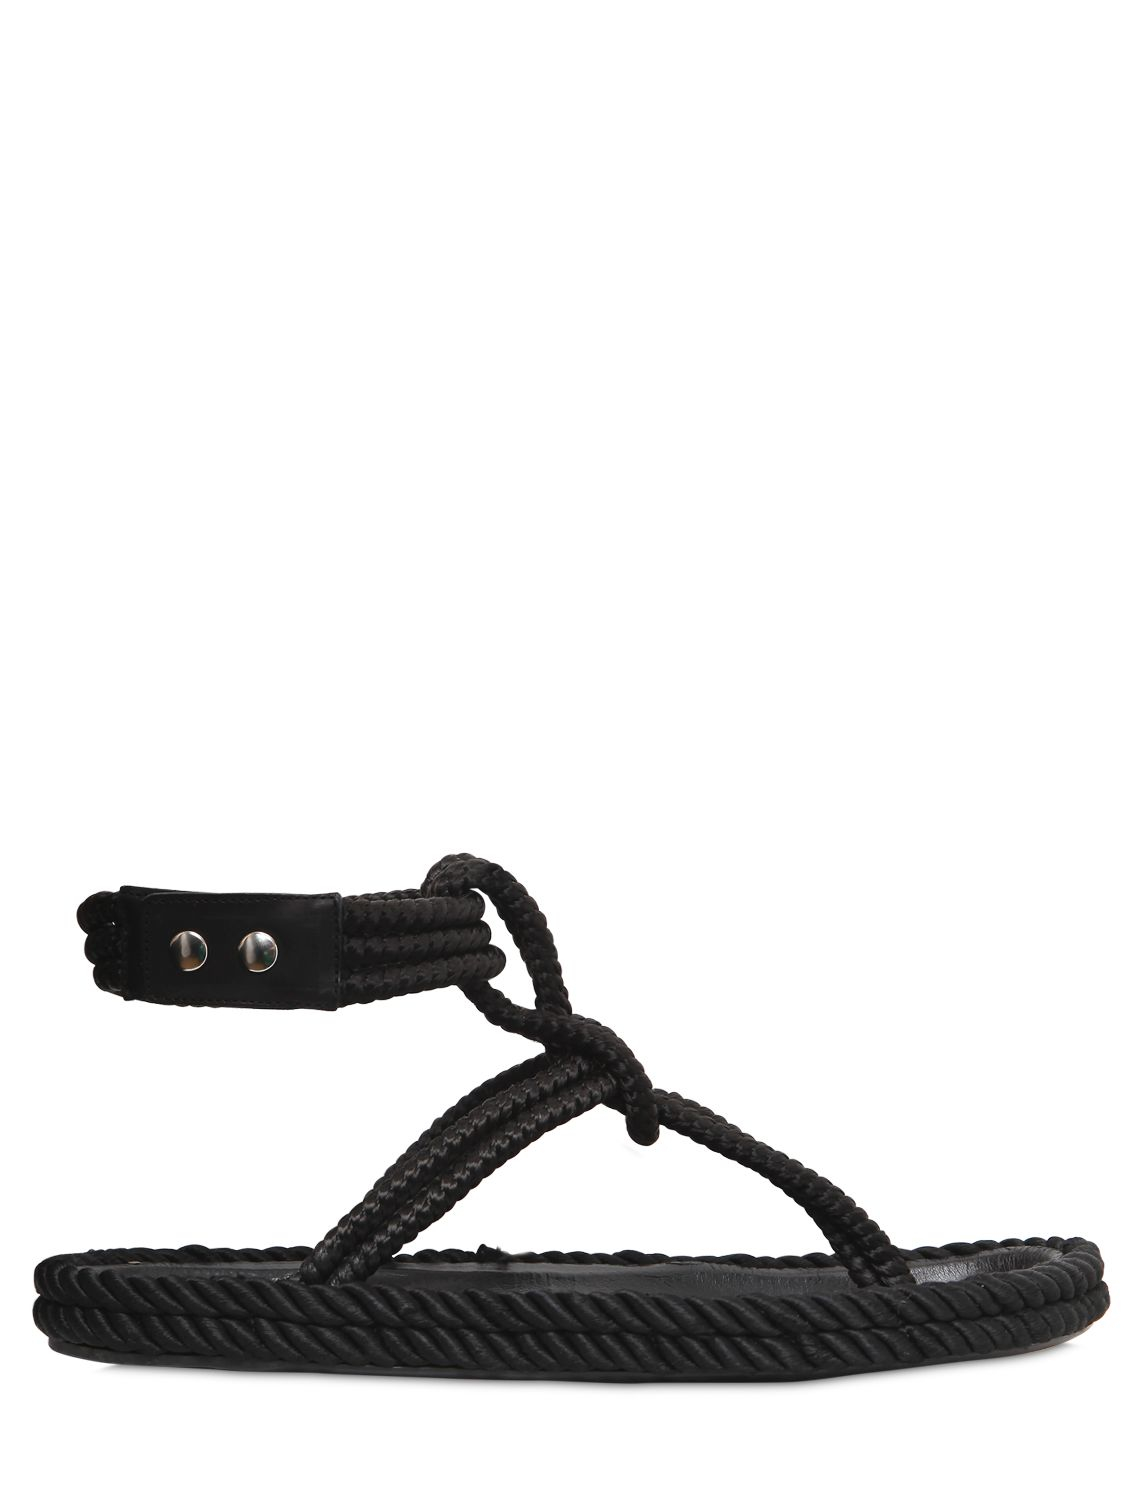 Marant Lesley Rope Sandals Black | Lyst